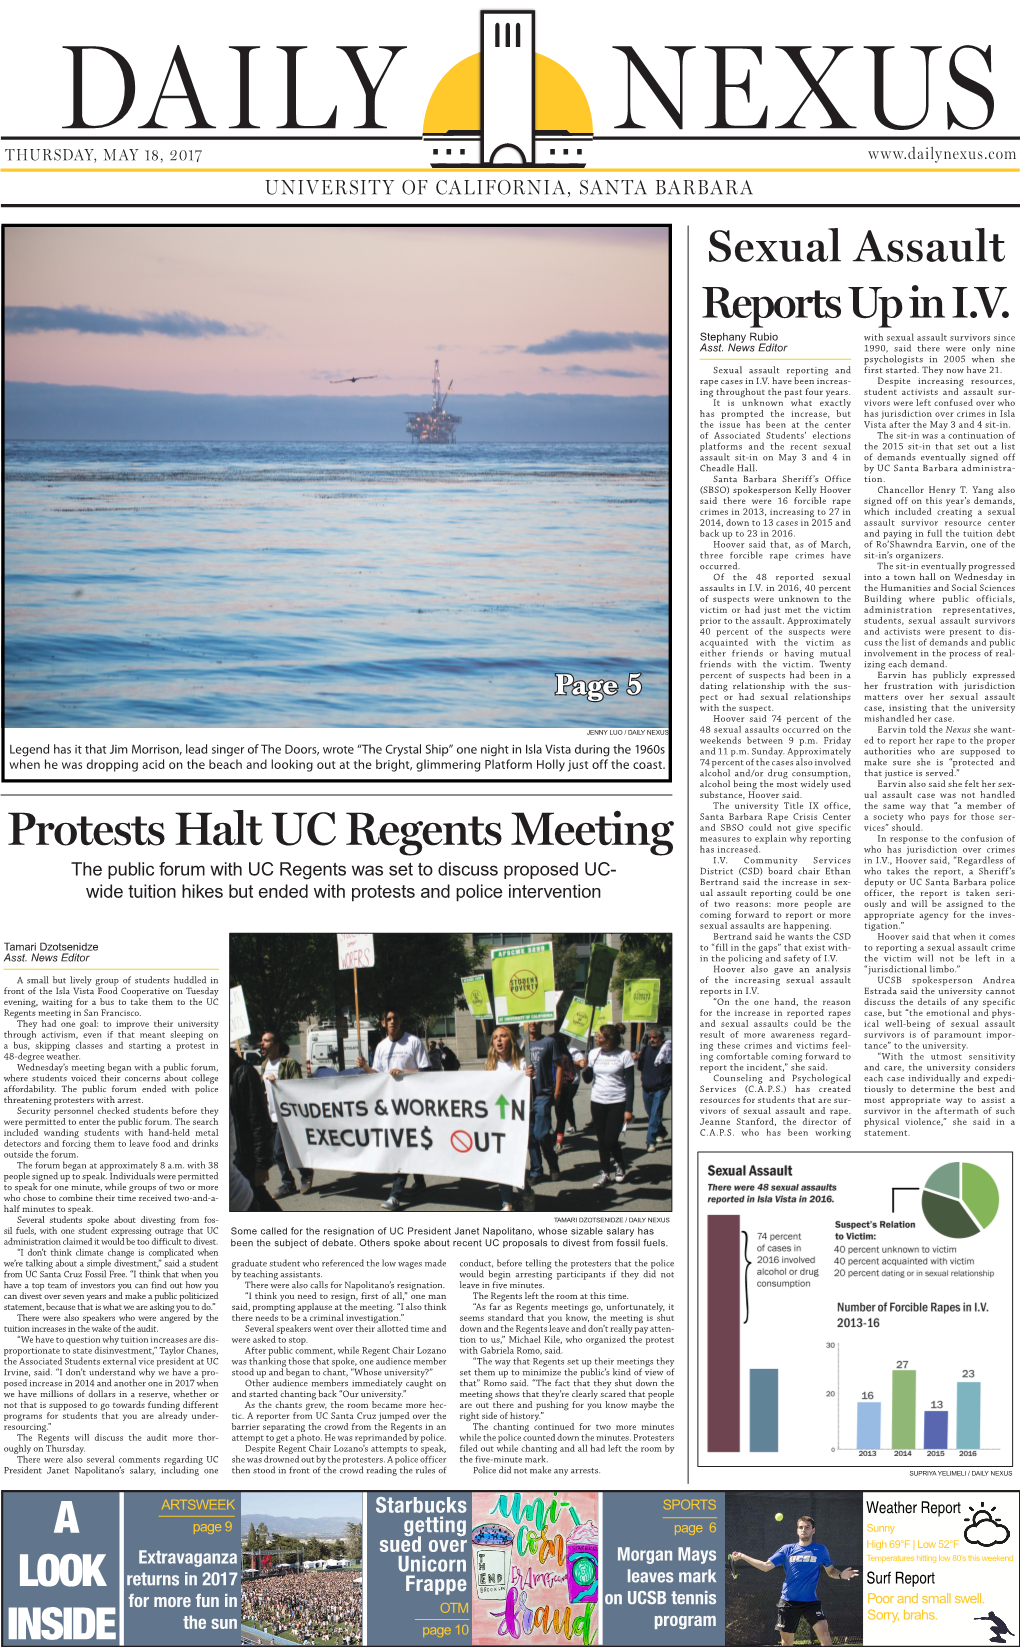 Protests Halt UC Regents Meeting Has Increased